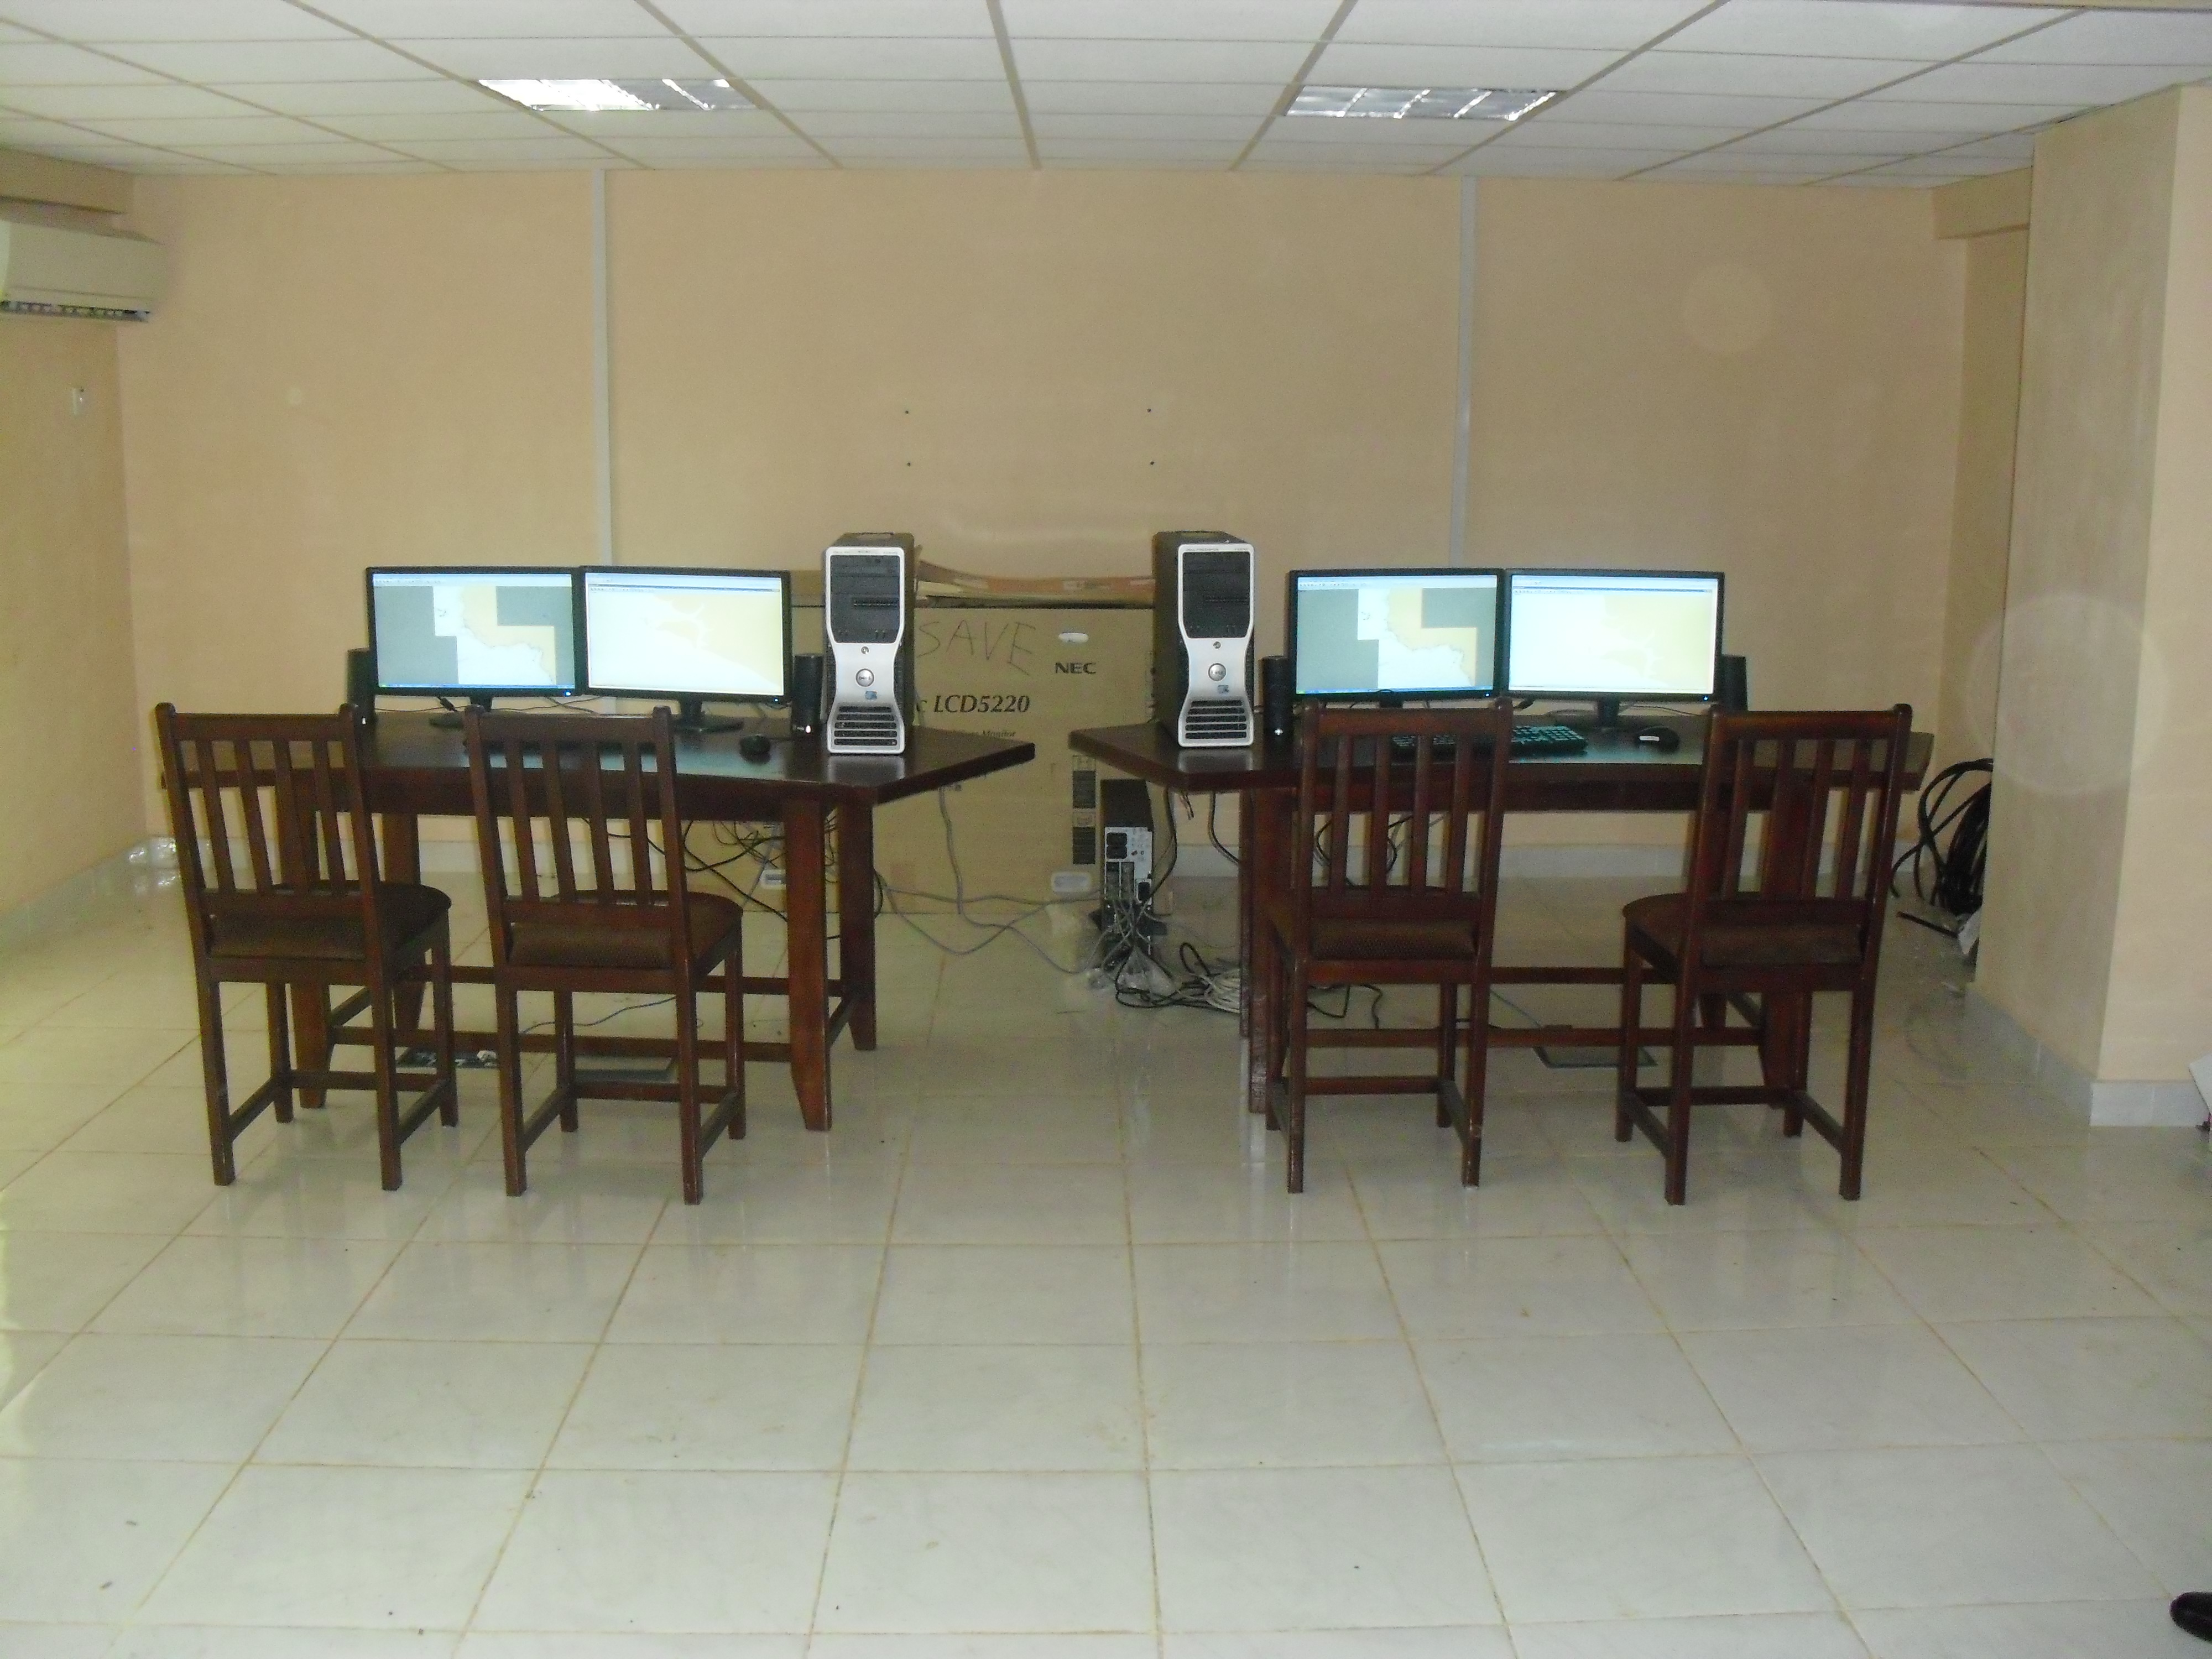 control center for coastal surveillance and border control